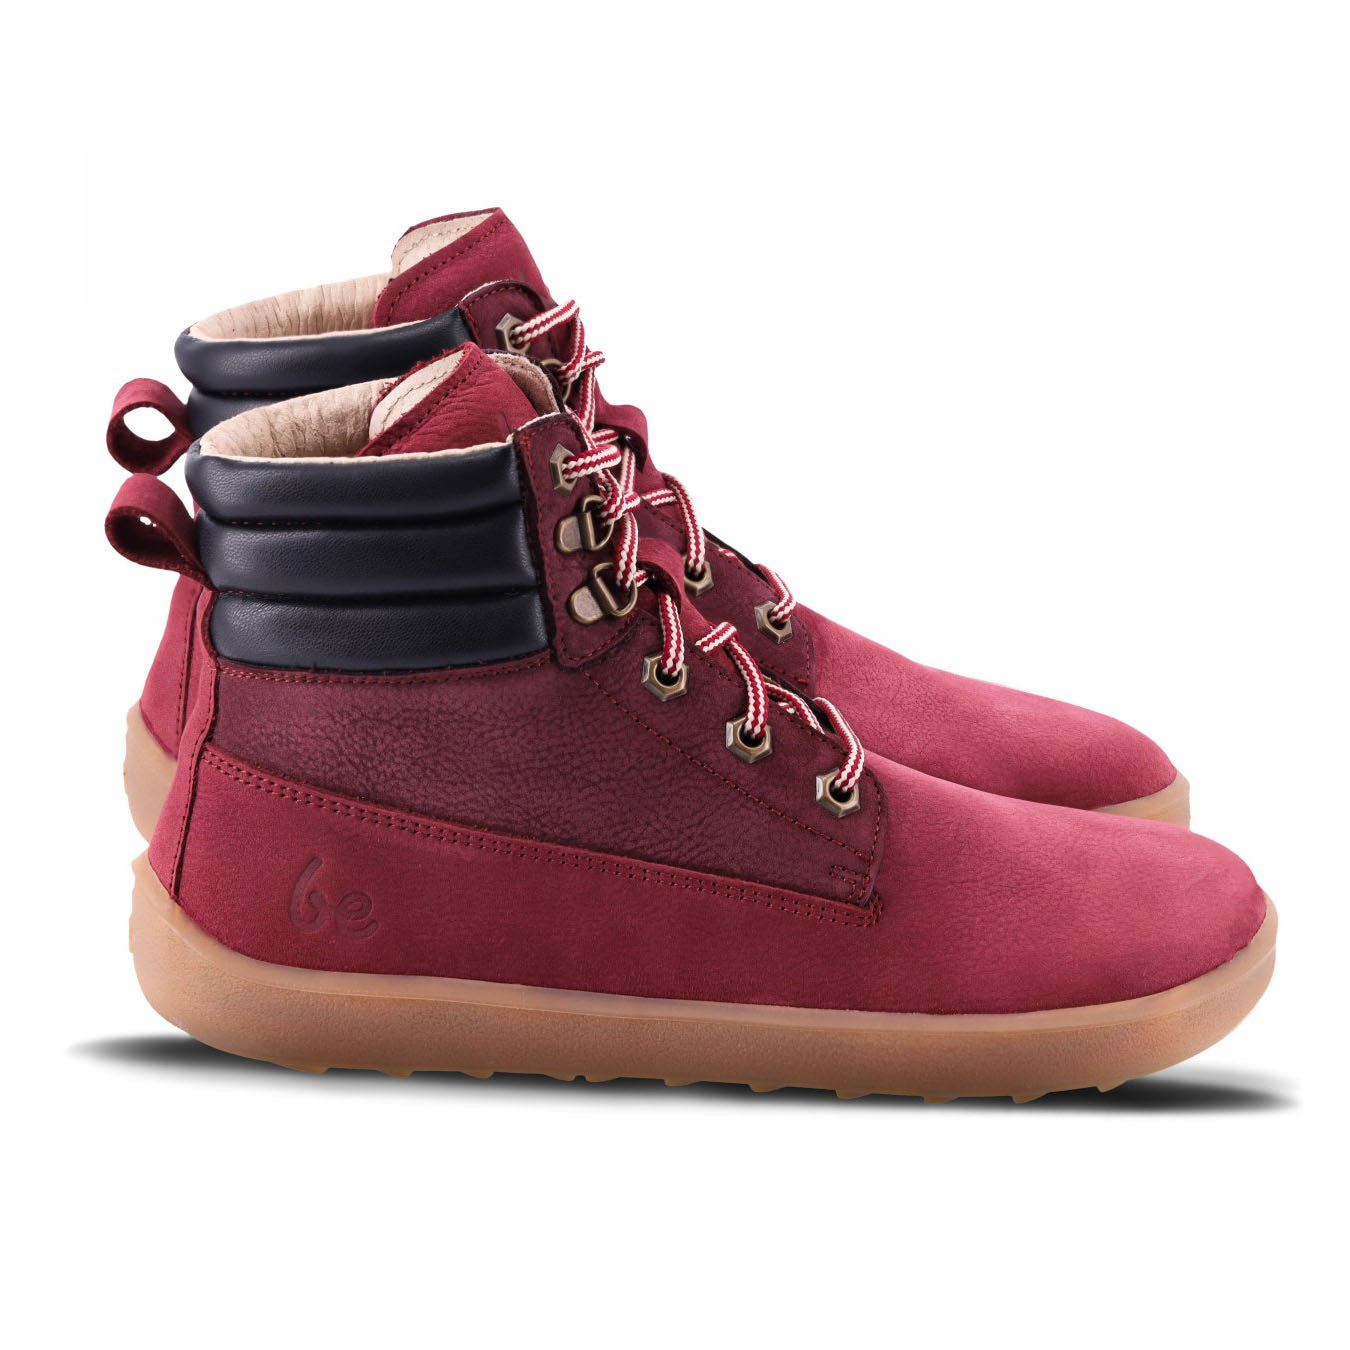 Be Lenka Nevada Neo Rugged Barefoot Boots - Burgundy 36 - Like New